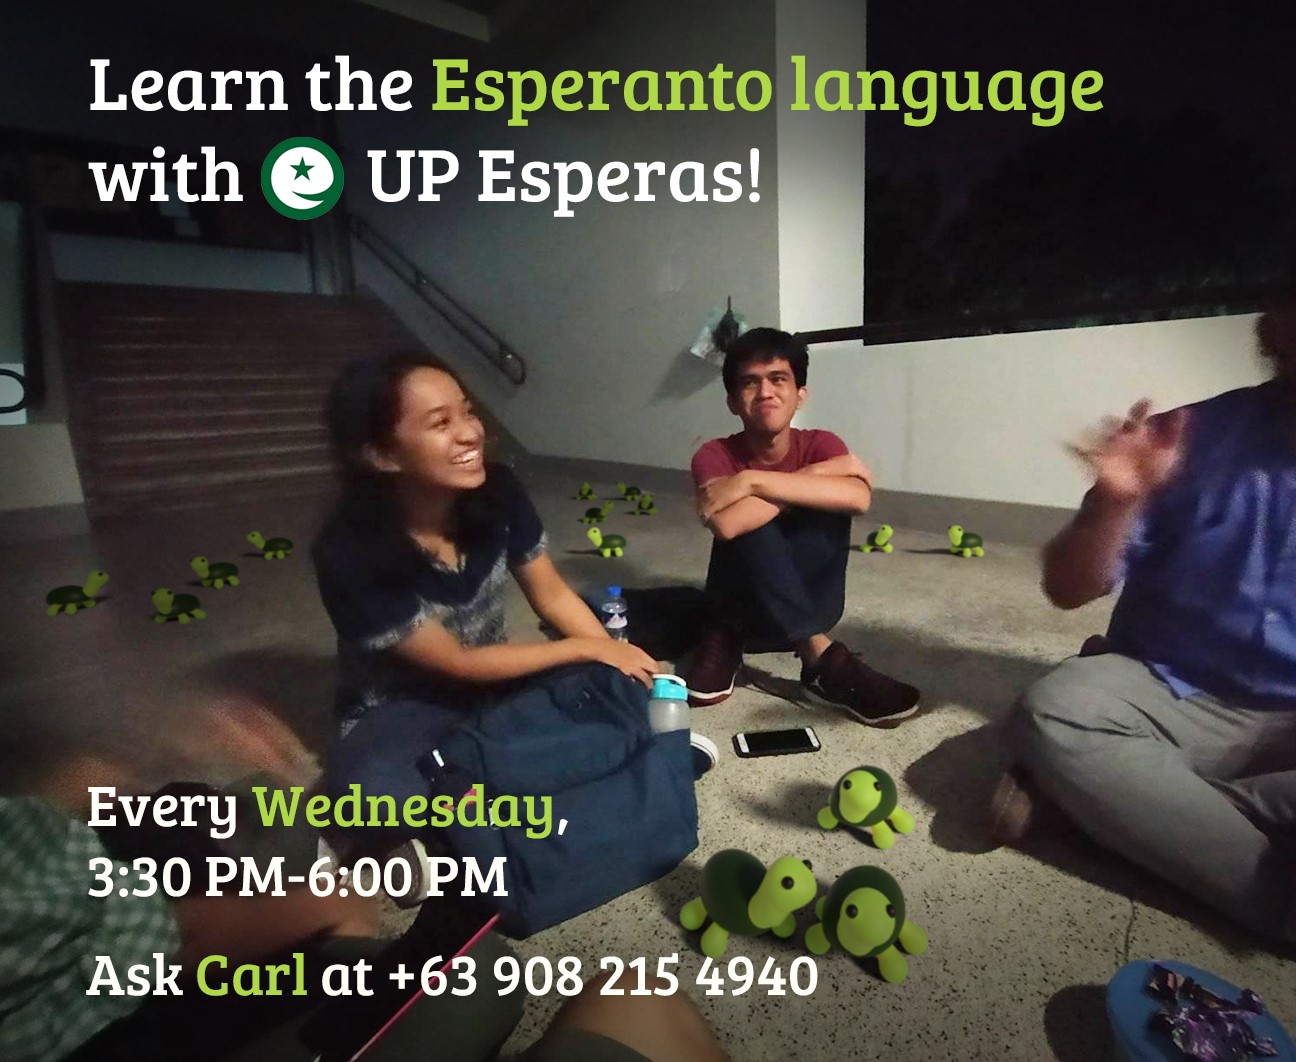 Language Lessons with UP Esperas